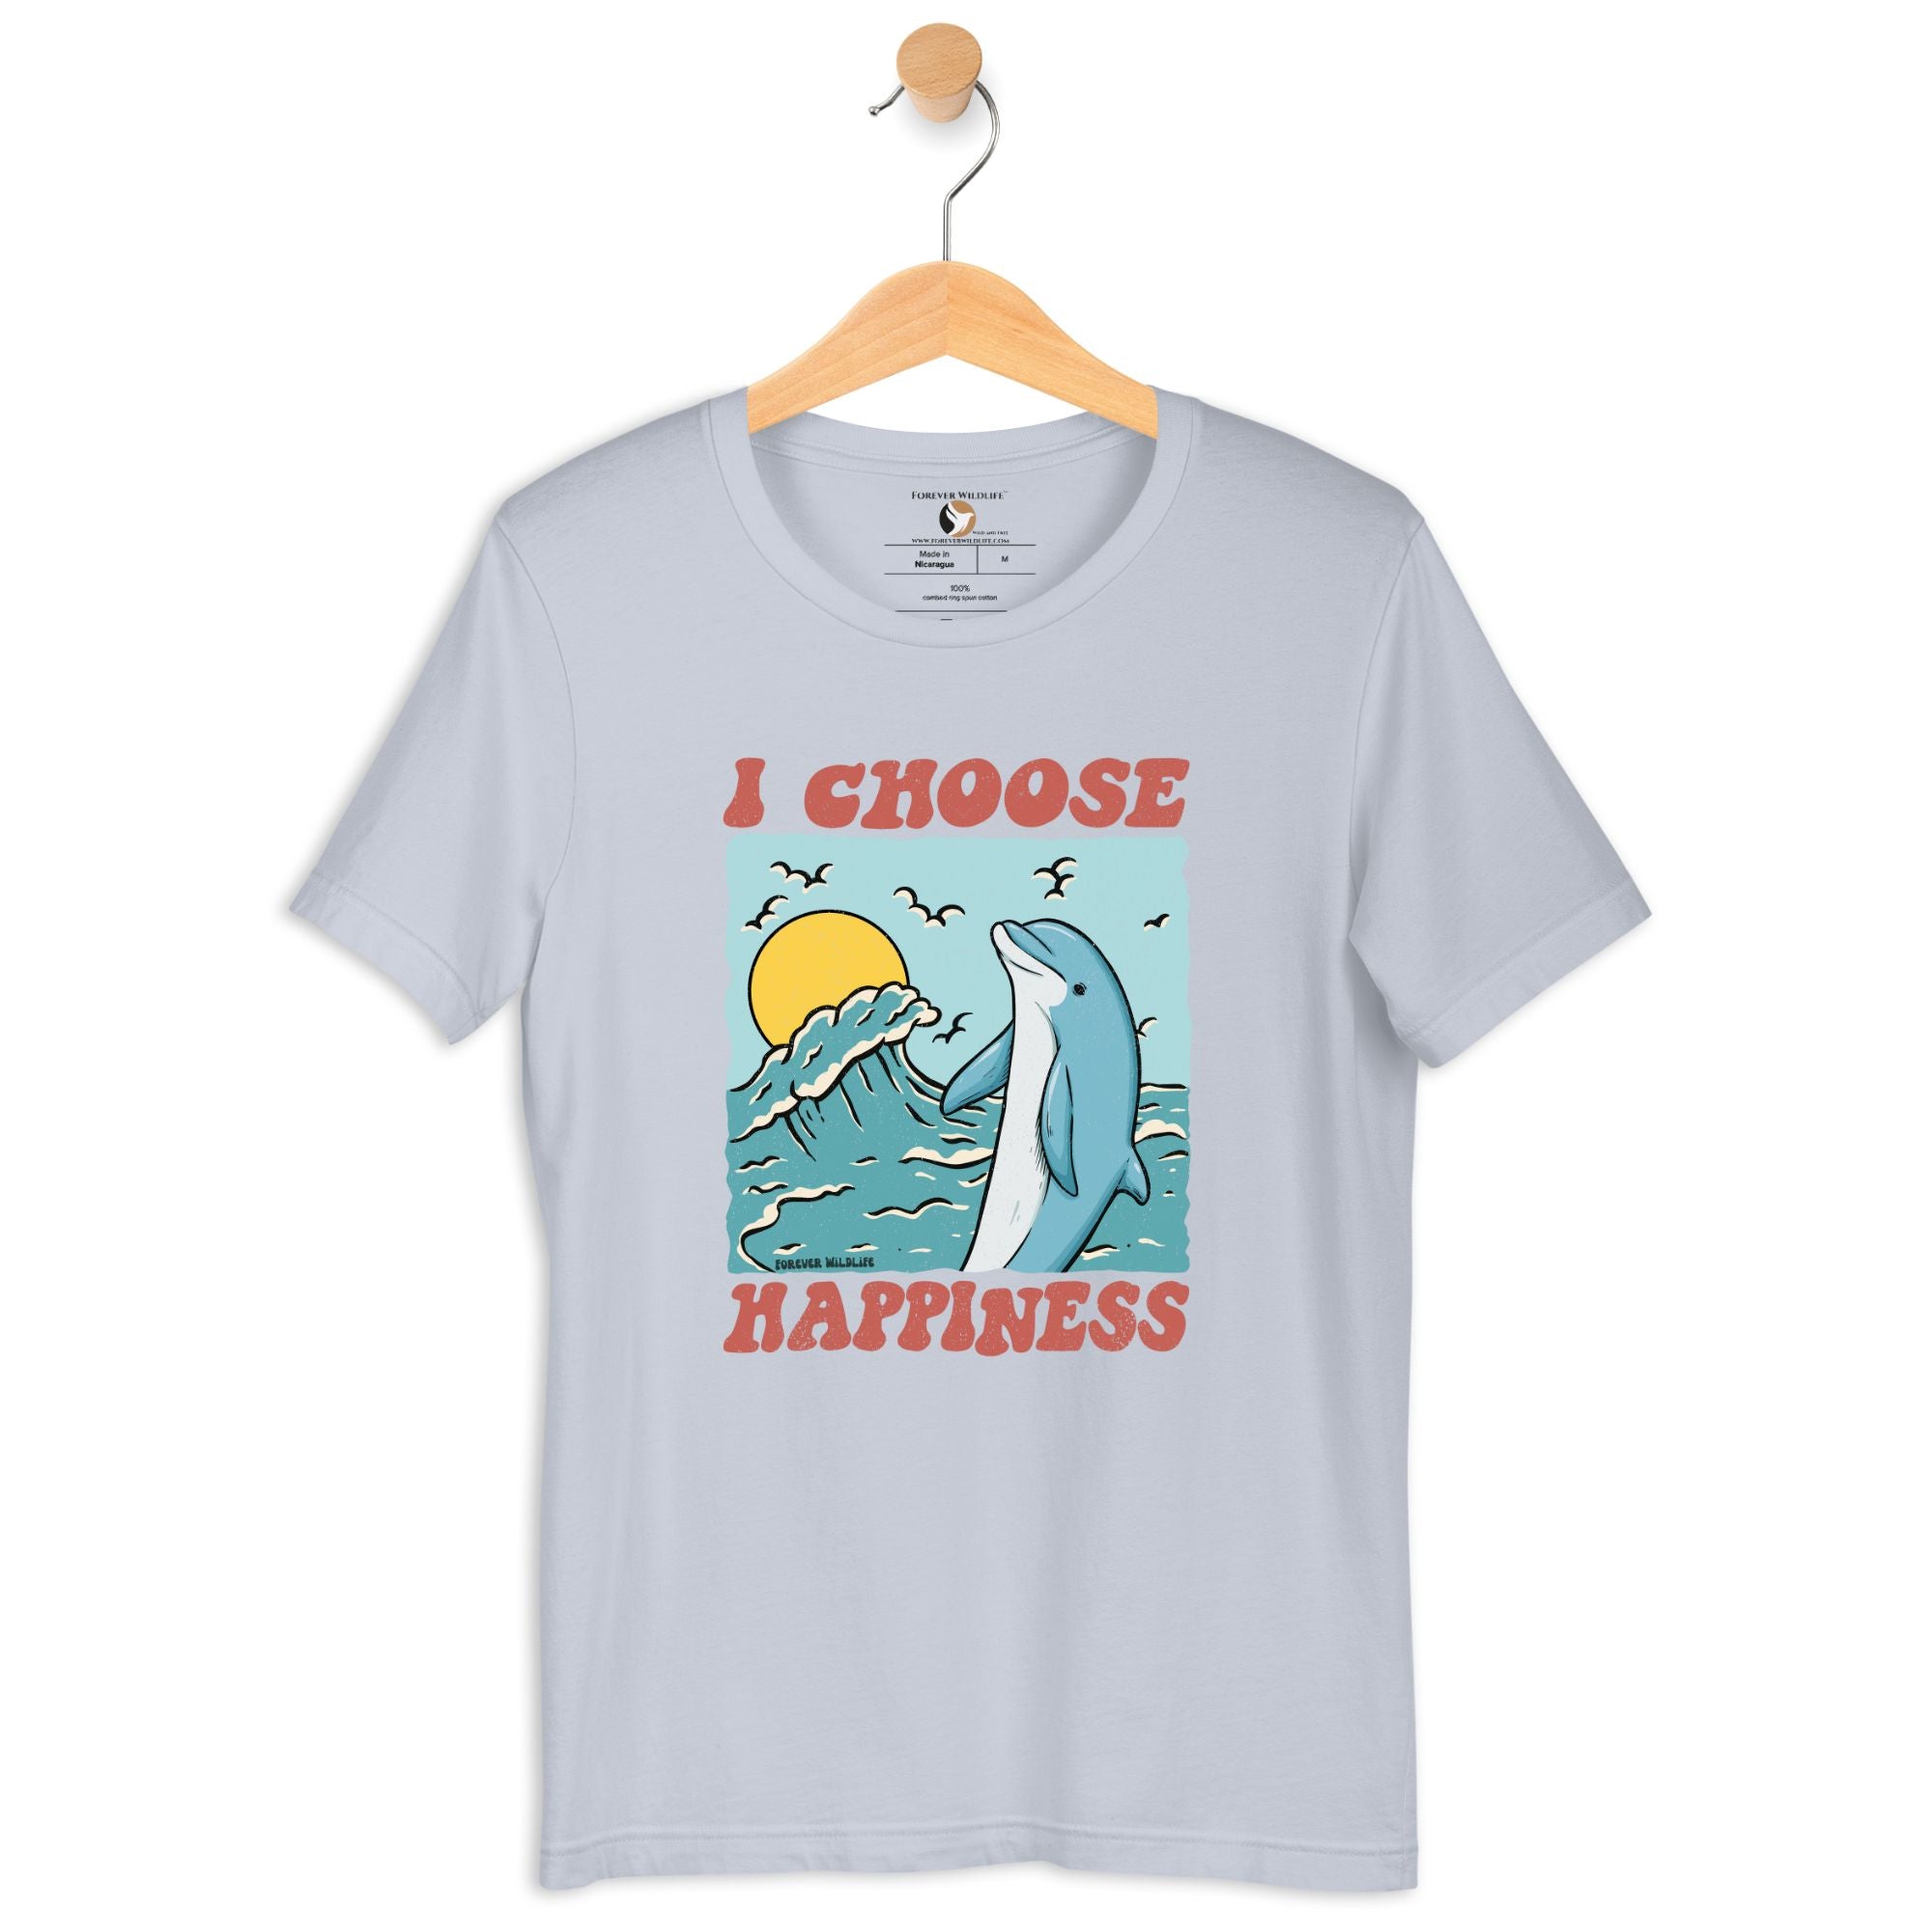 Dolphin T-Shirt in Light Blue – Premium Wildlife T-Shirt Design, Wildlife Clothing & Apparel from Forever Wildlife